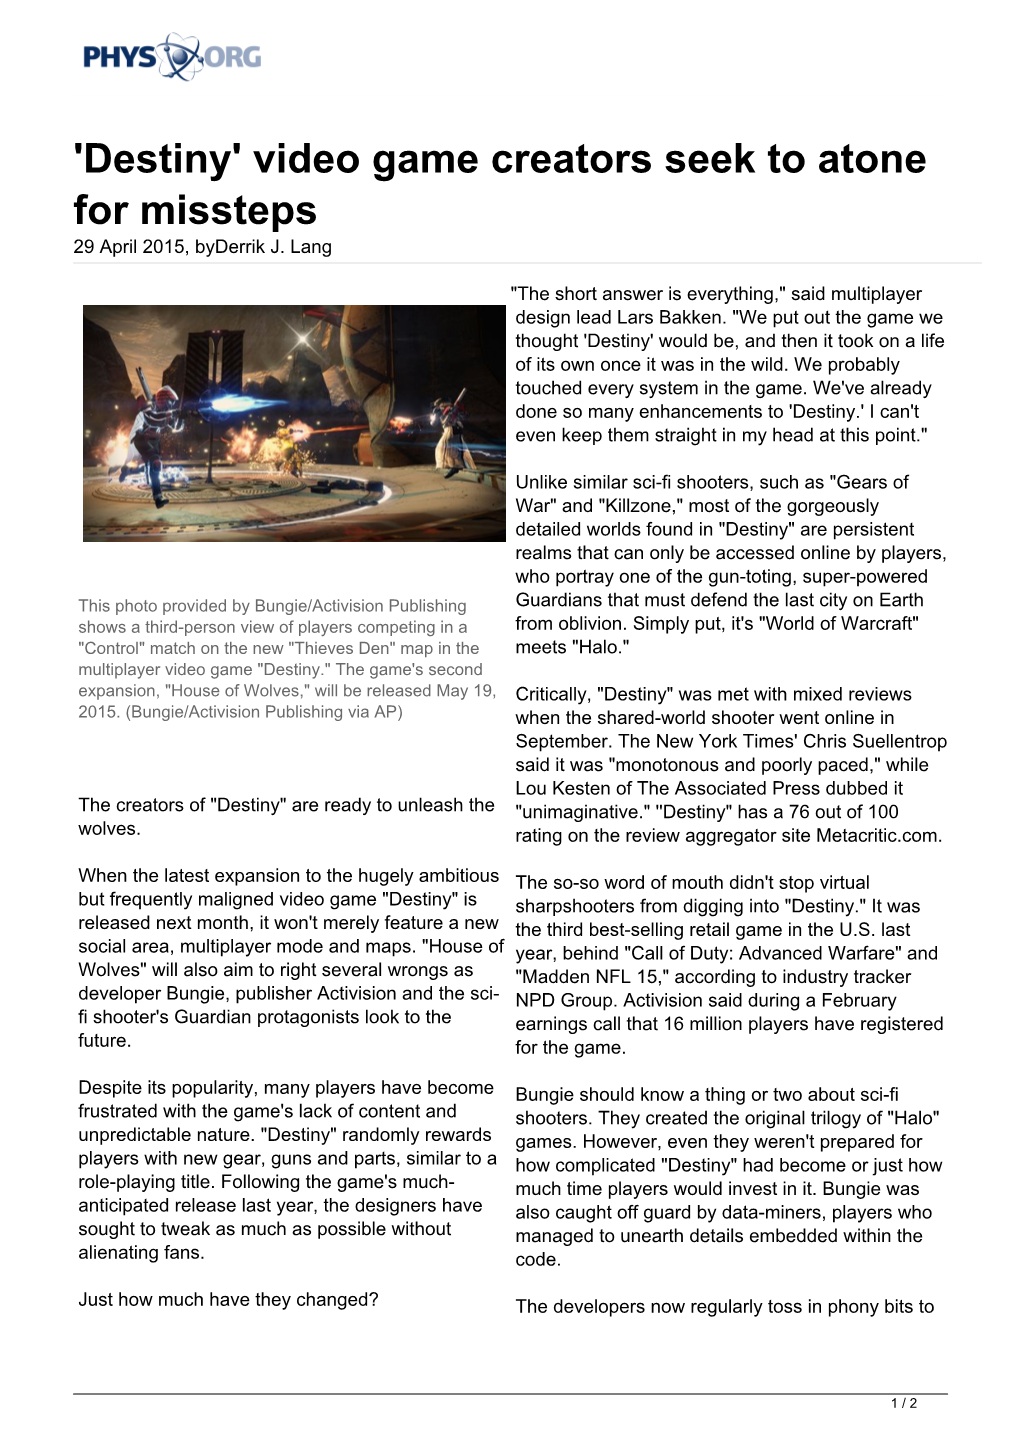 Destiny' Video Game Creators Seek to Atone for Missteps 29 April 2015, Byderrik J